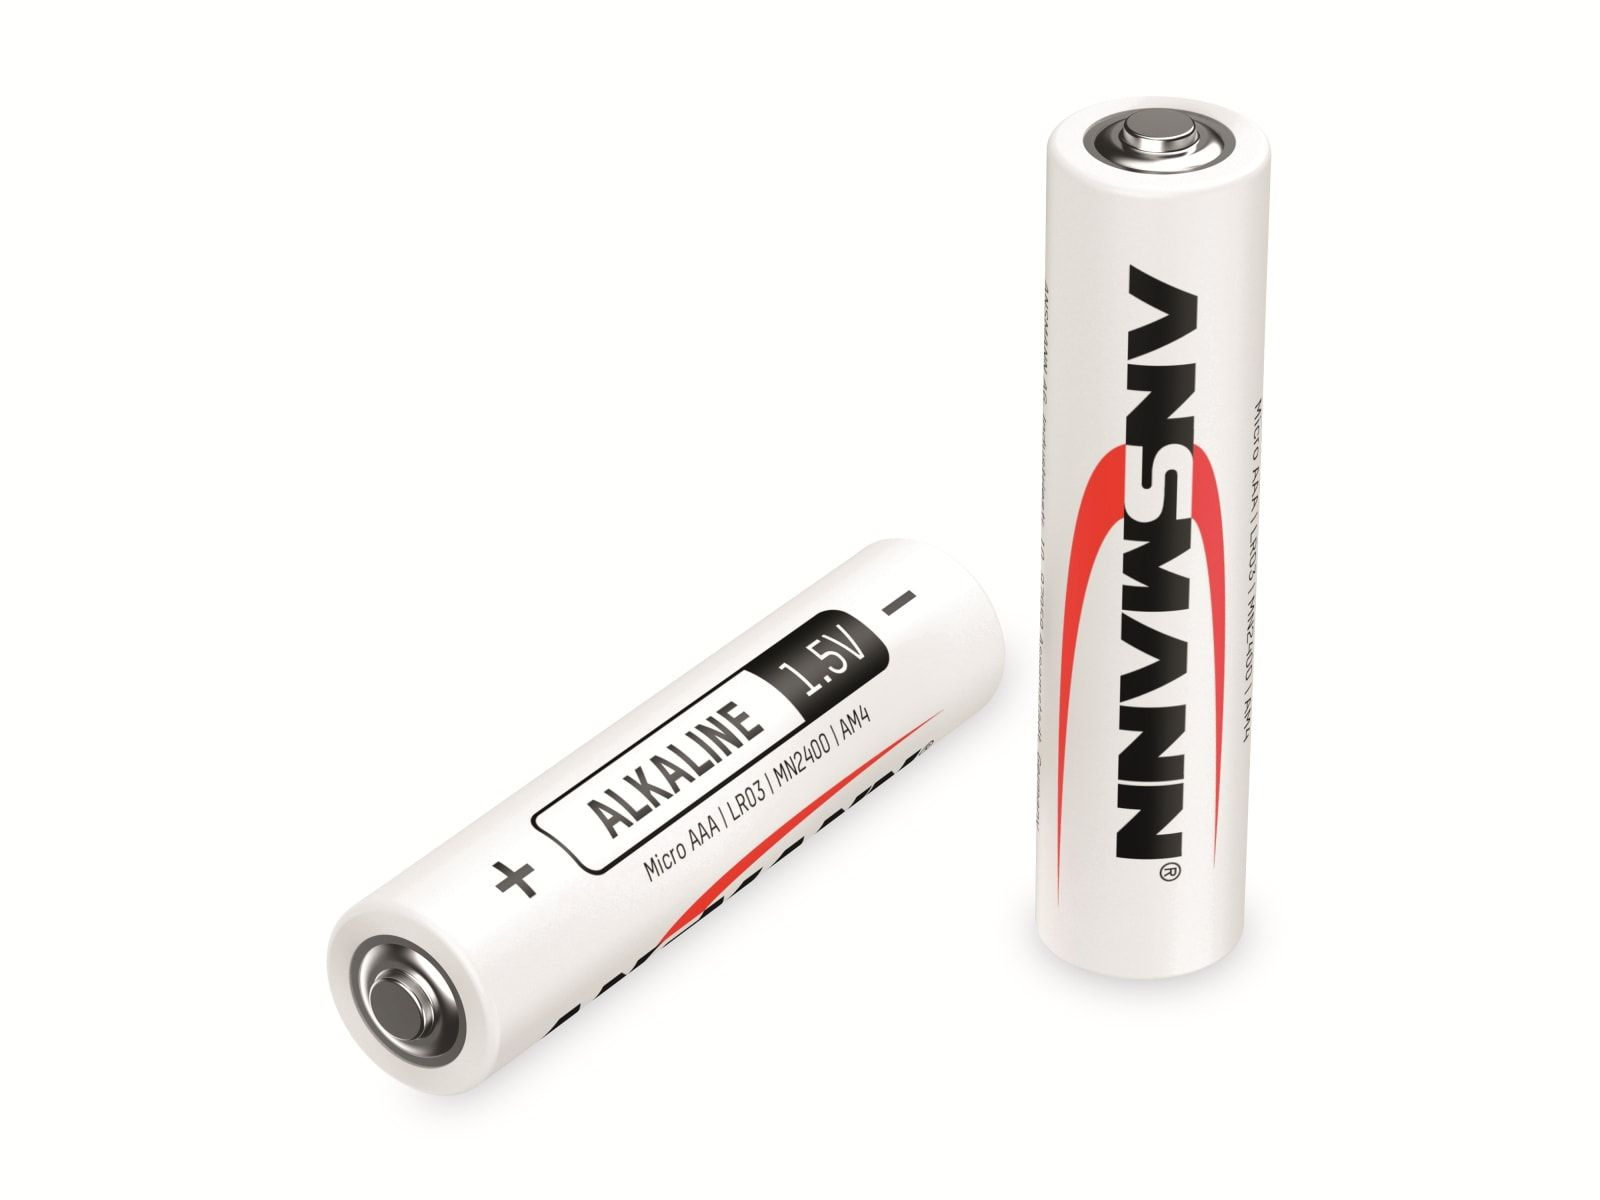 ANSMANN Micro-Batterie-Set, Alkaline, 42 Batterien Alkaline Stück